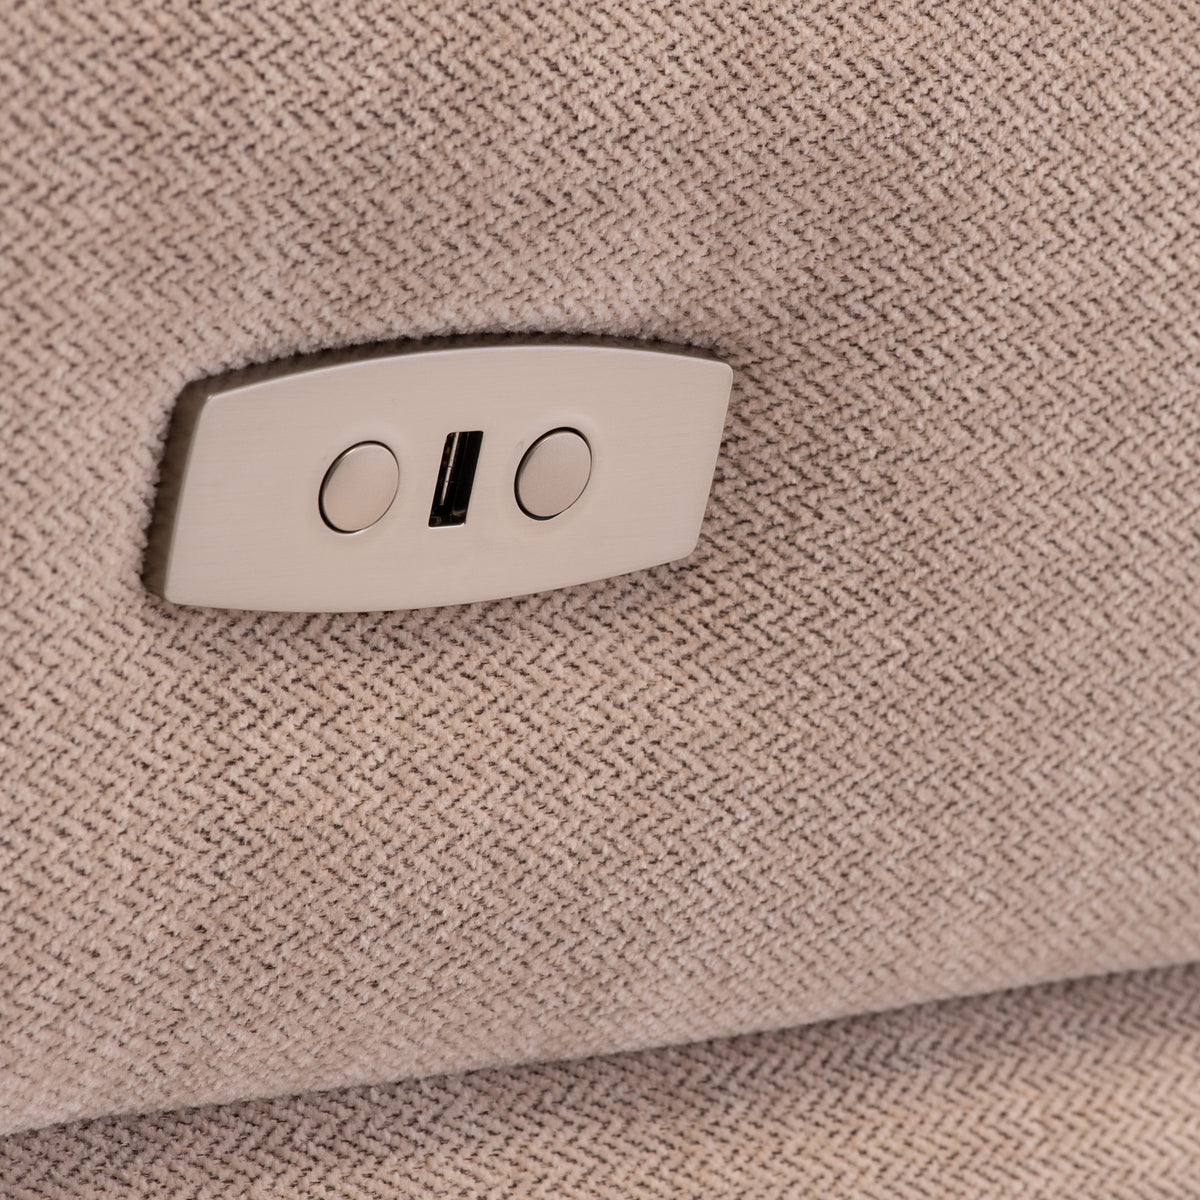 Dalton Fabric Electric Reclining 3 Seater Sofa